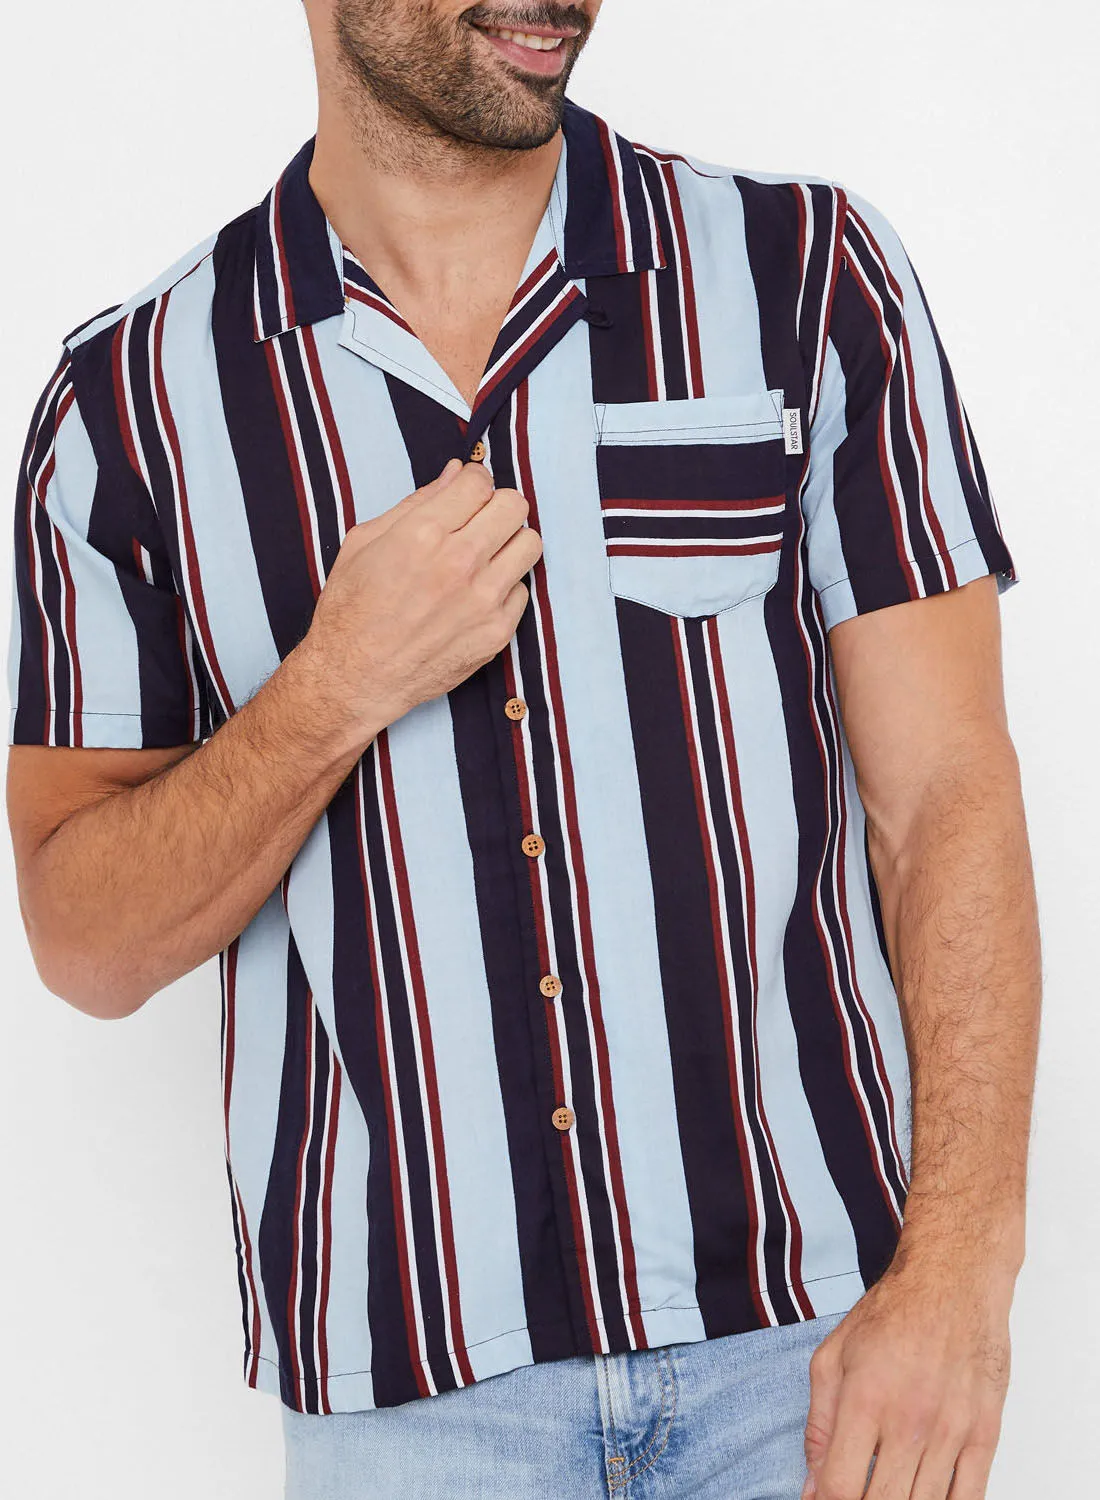 SOUL STAR Multi Vertical Striped Shirt Navy